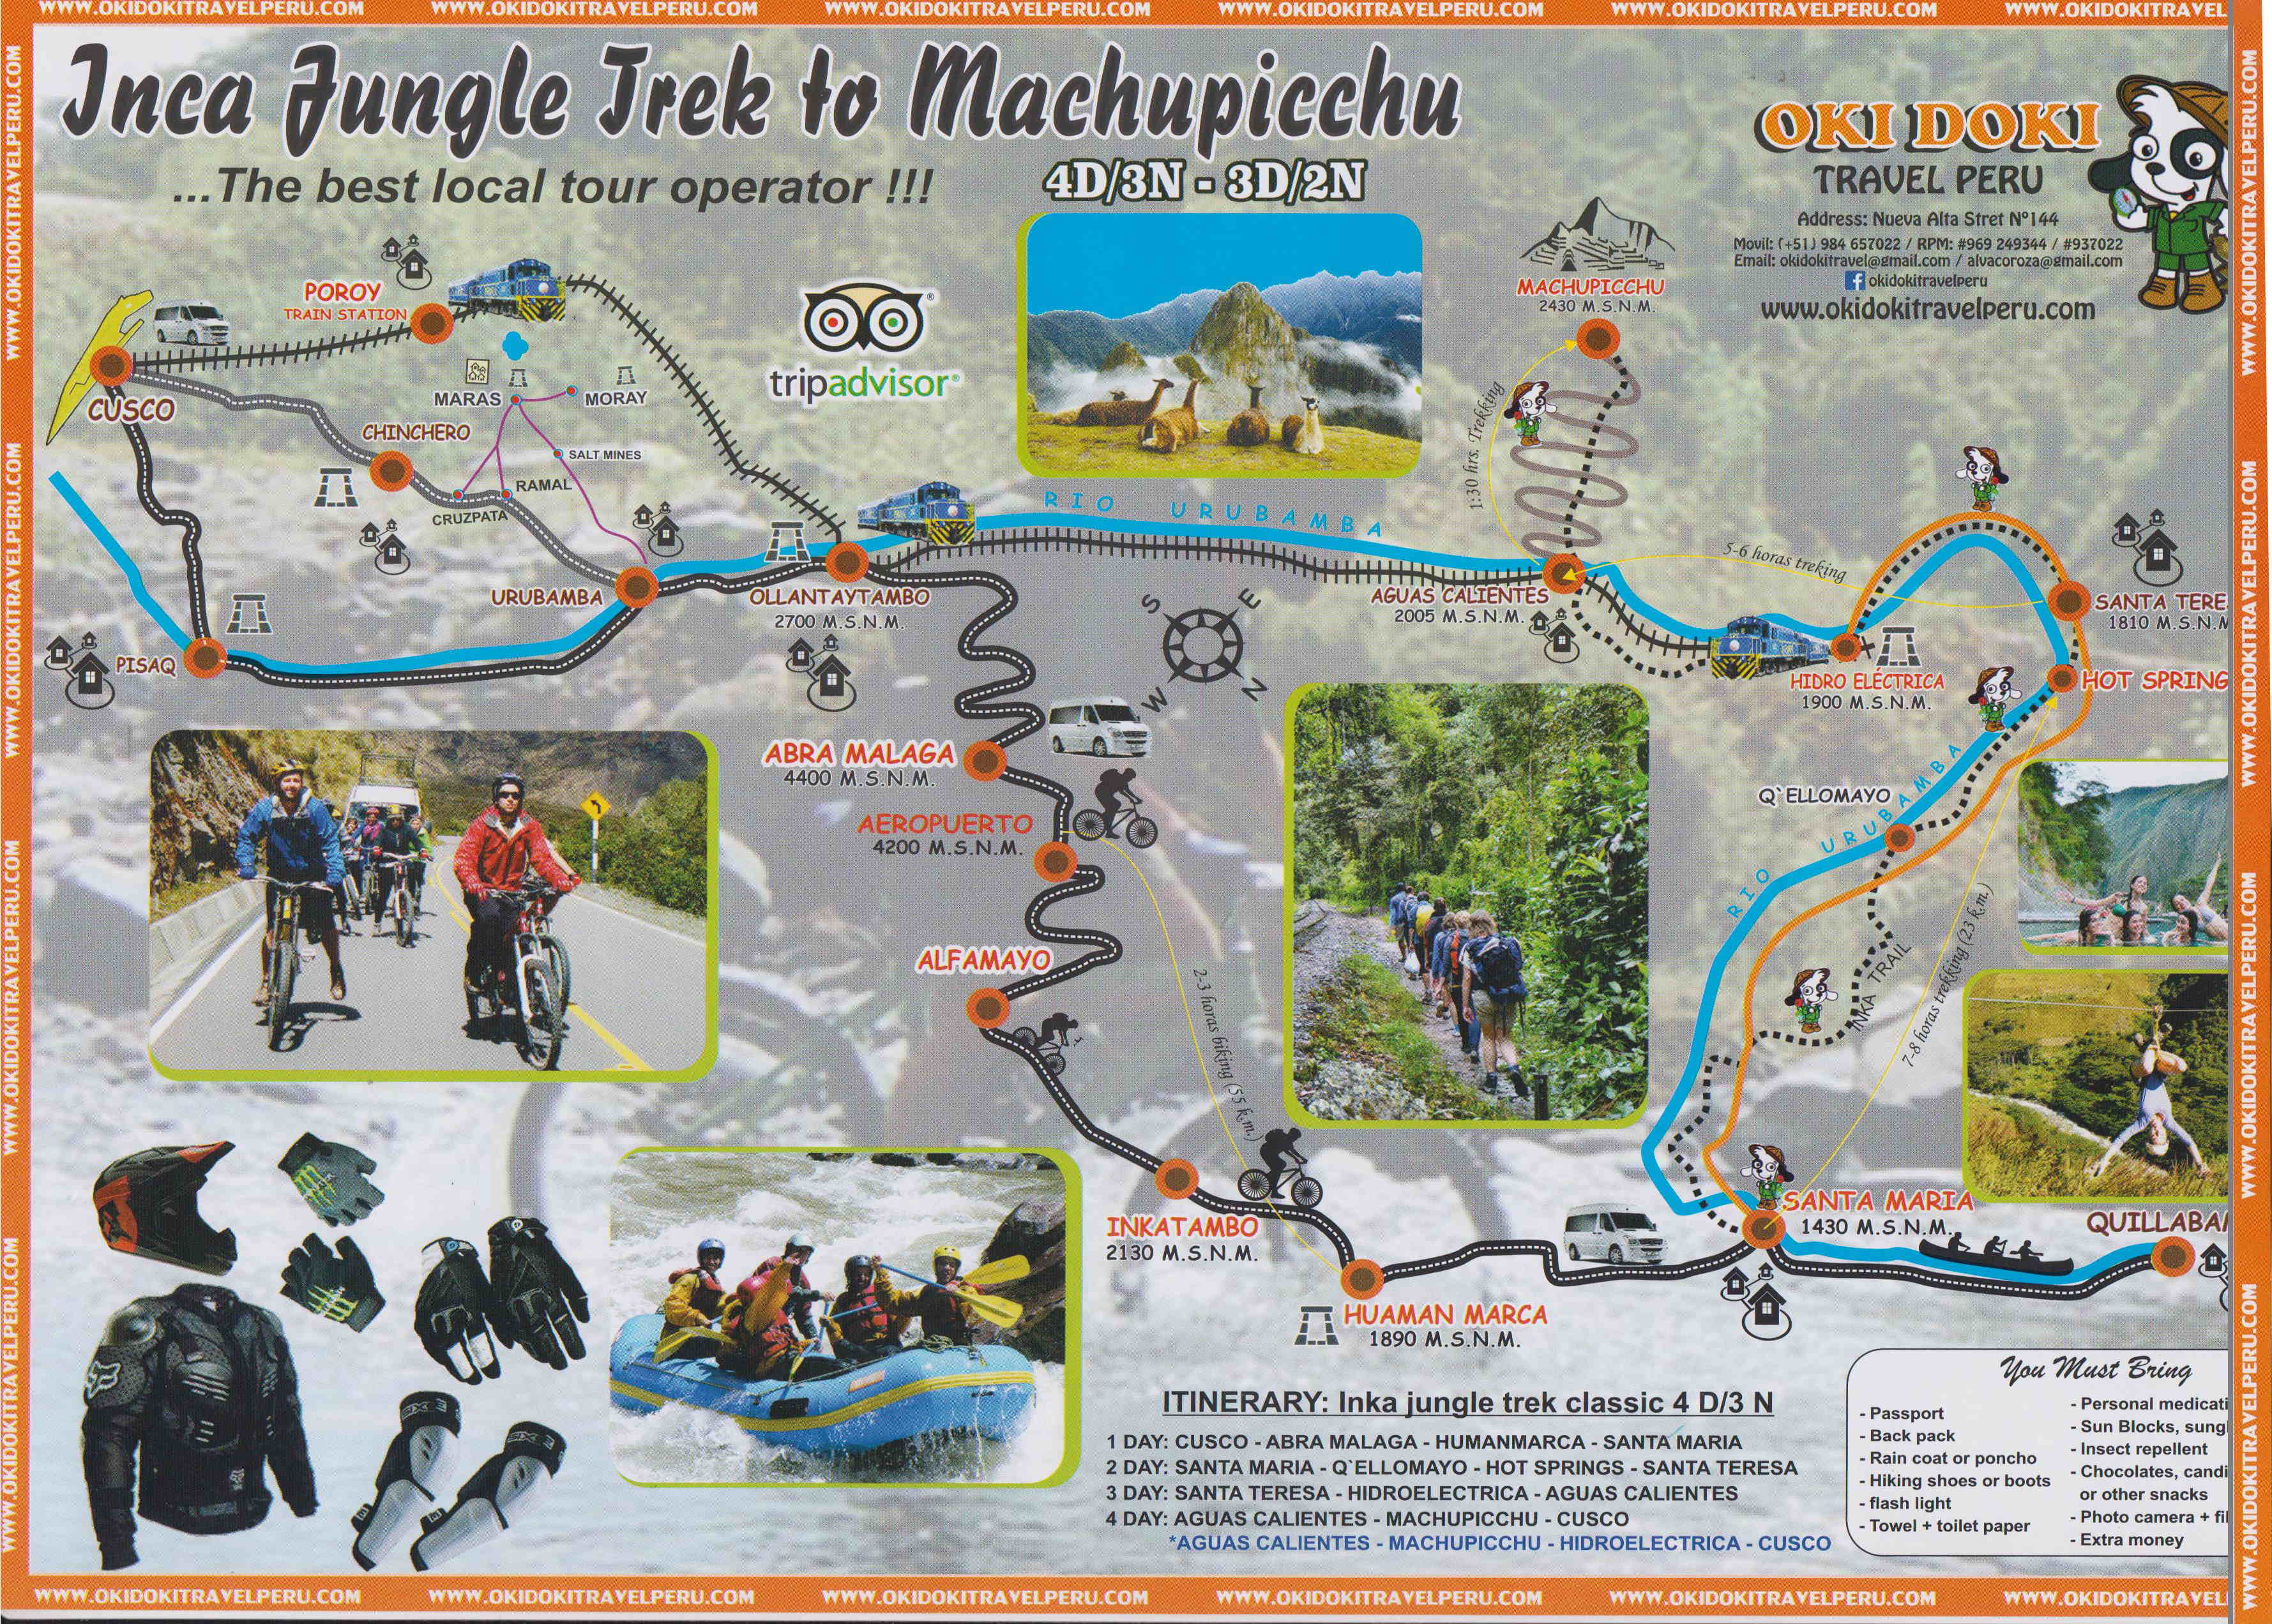 TOURS MAP: Inka Jungle Trek to Machu Picchu 4 days return by train lastday - Okidoki Travel Peru